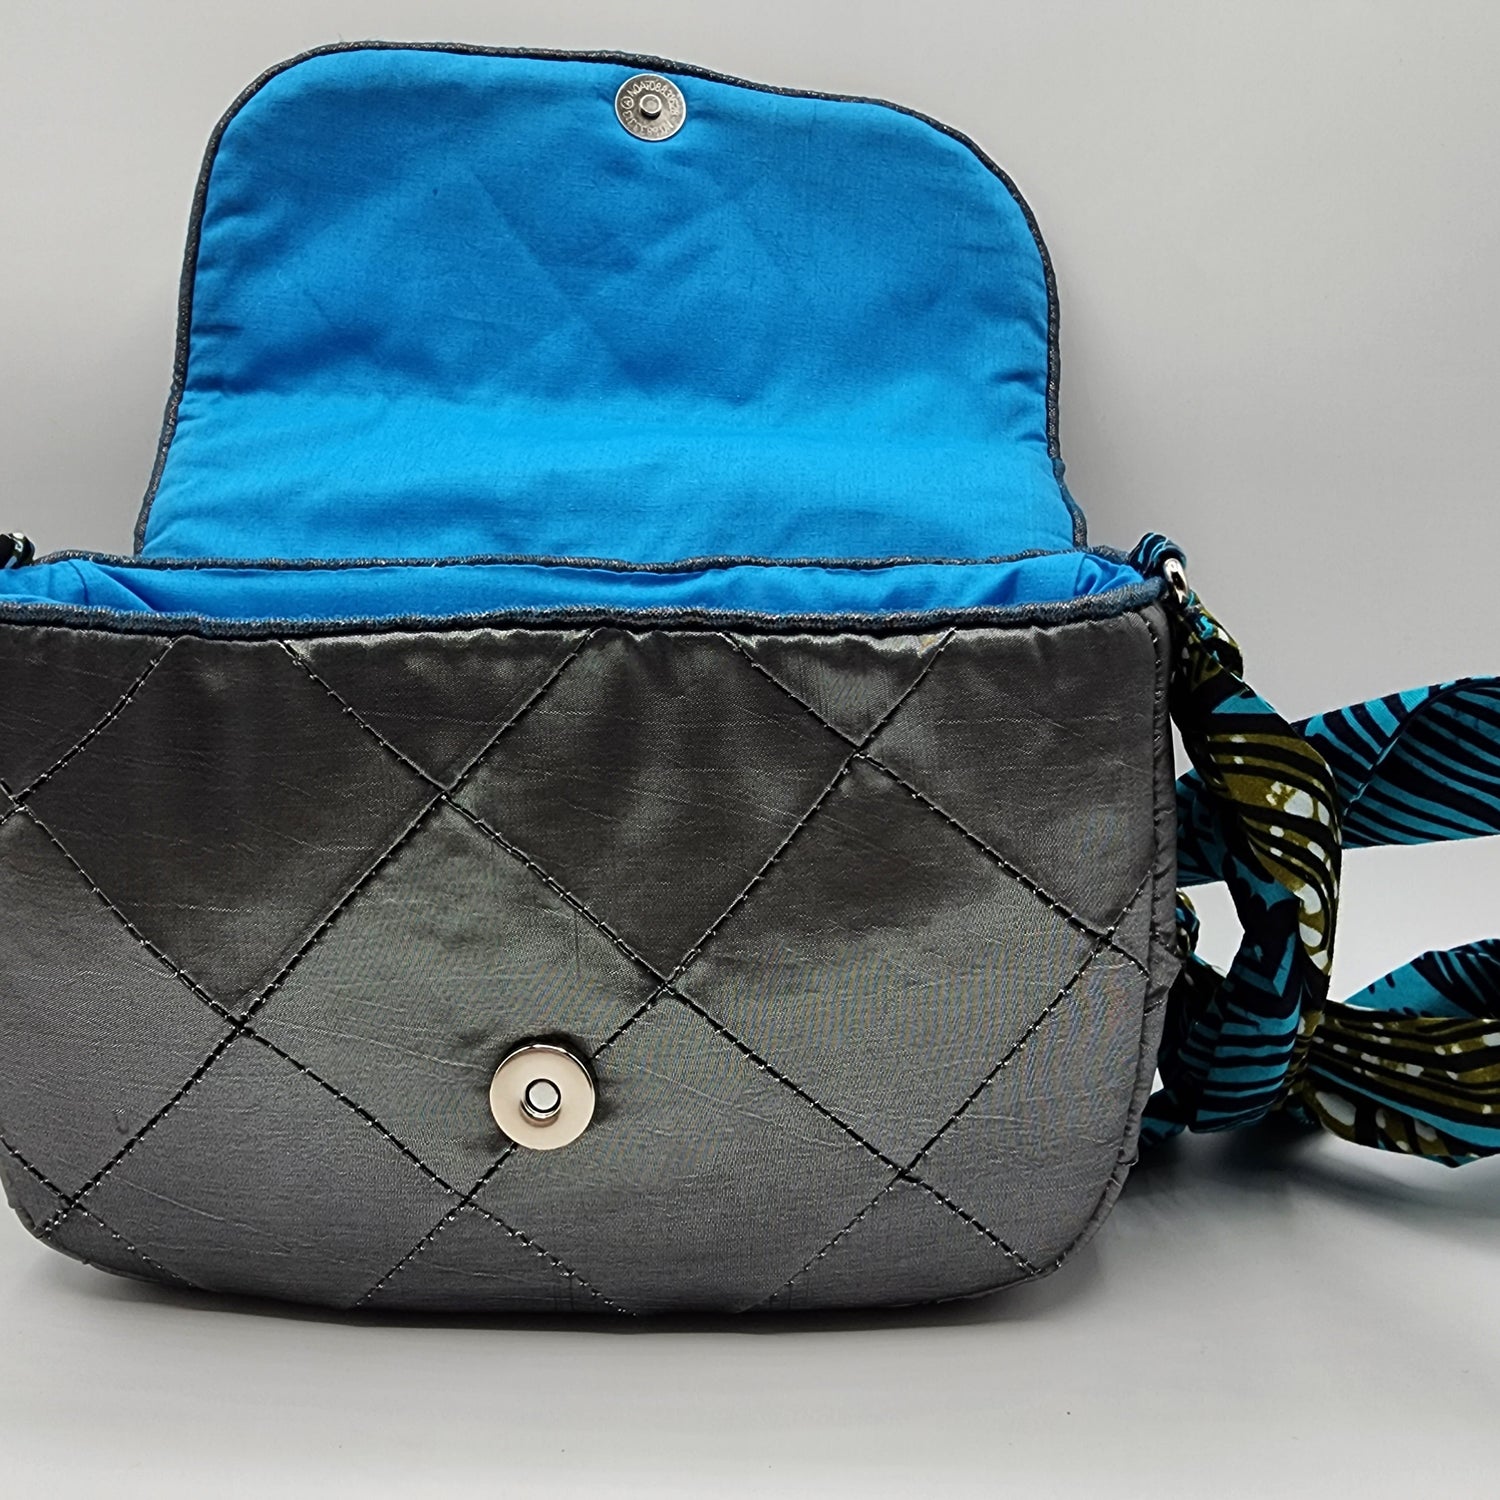 Silver & Blue Shoulder Bag - NOHBI